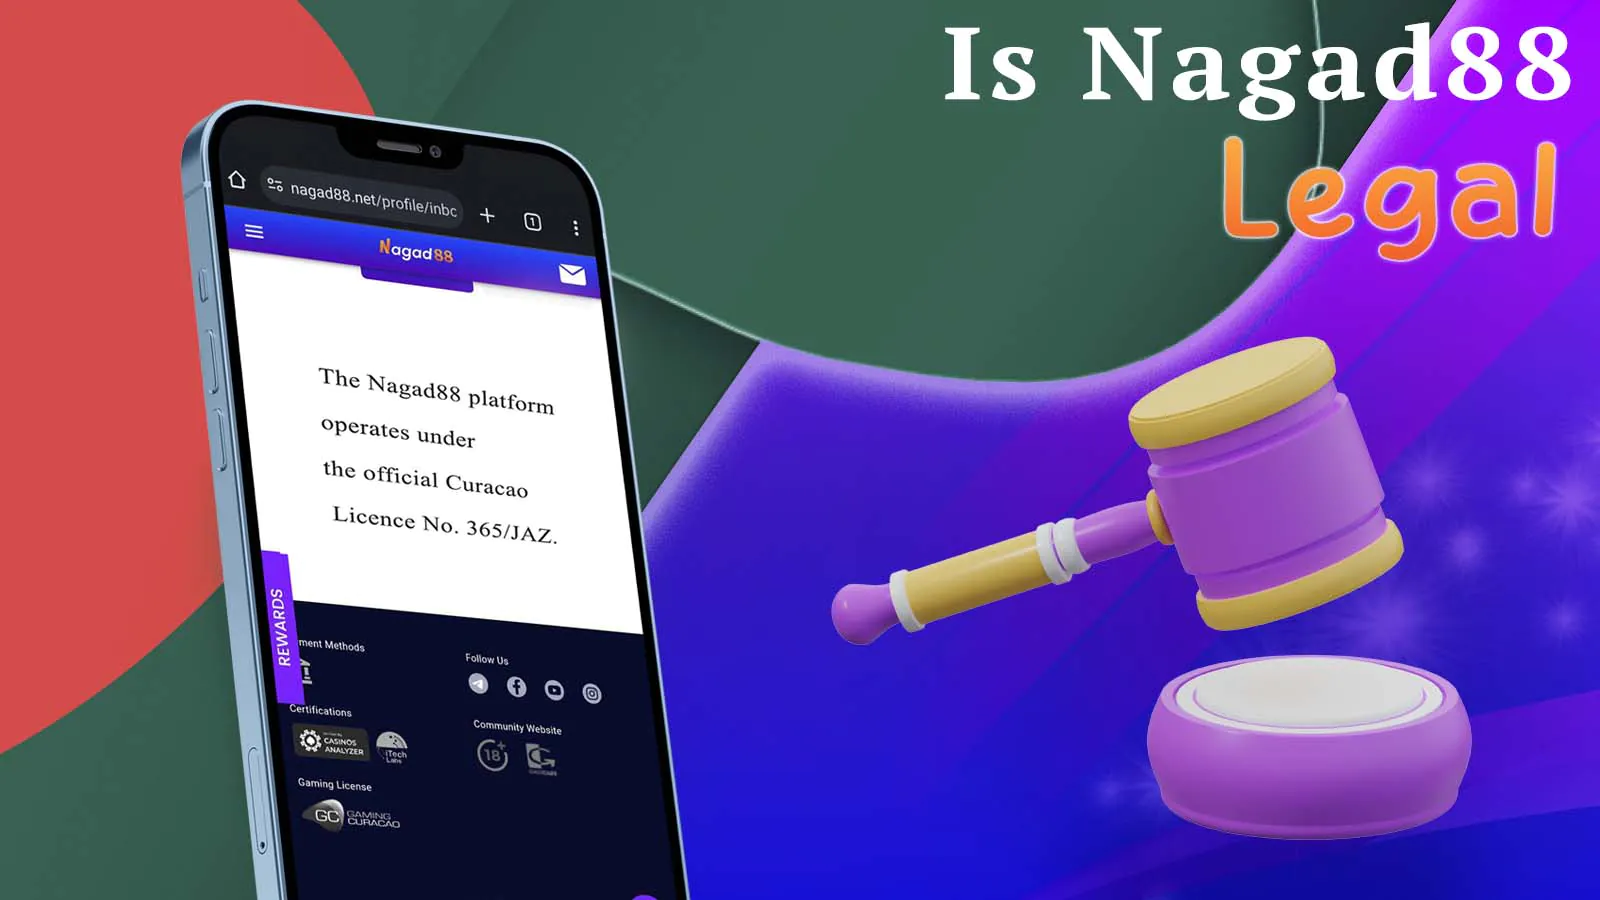 Nagad88 is legal in Bangladesh